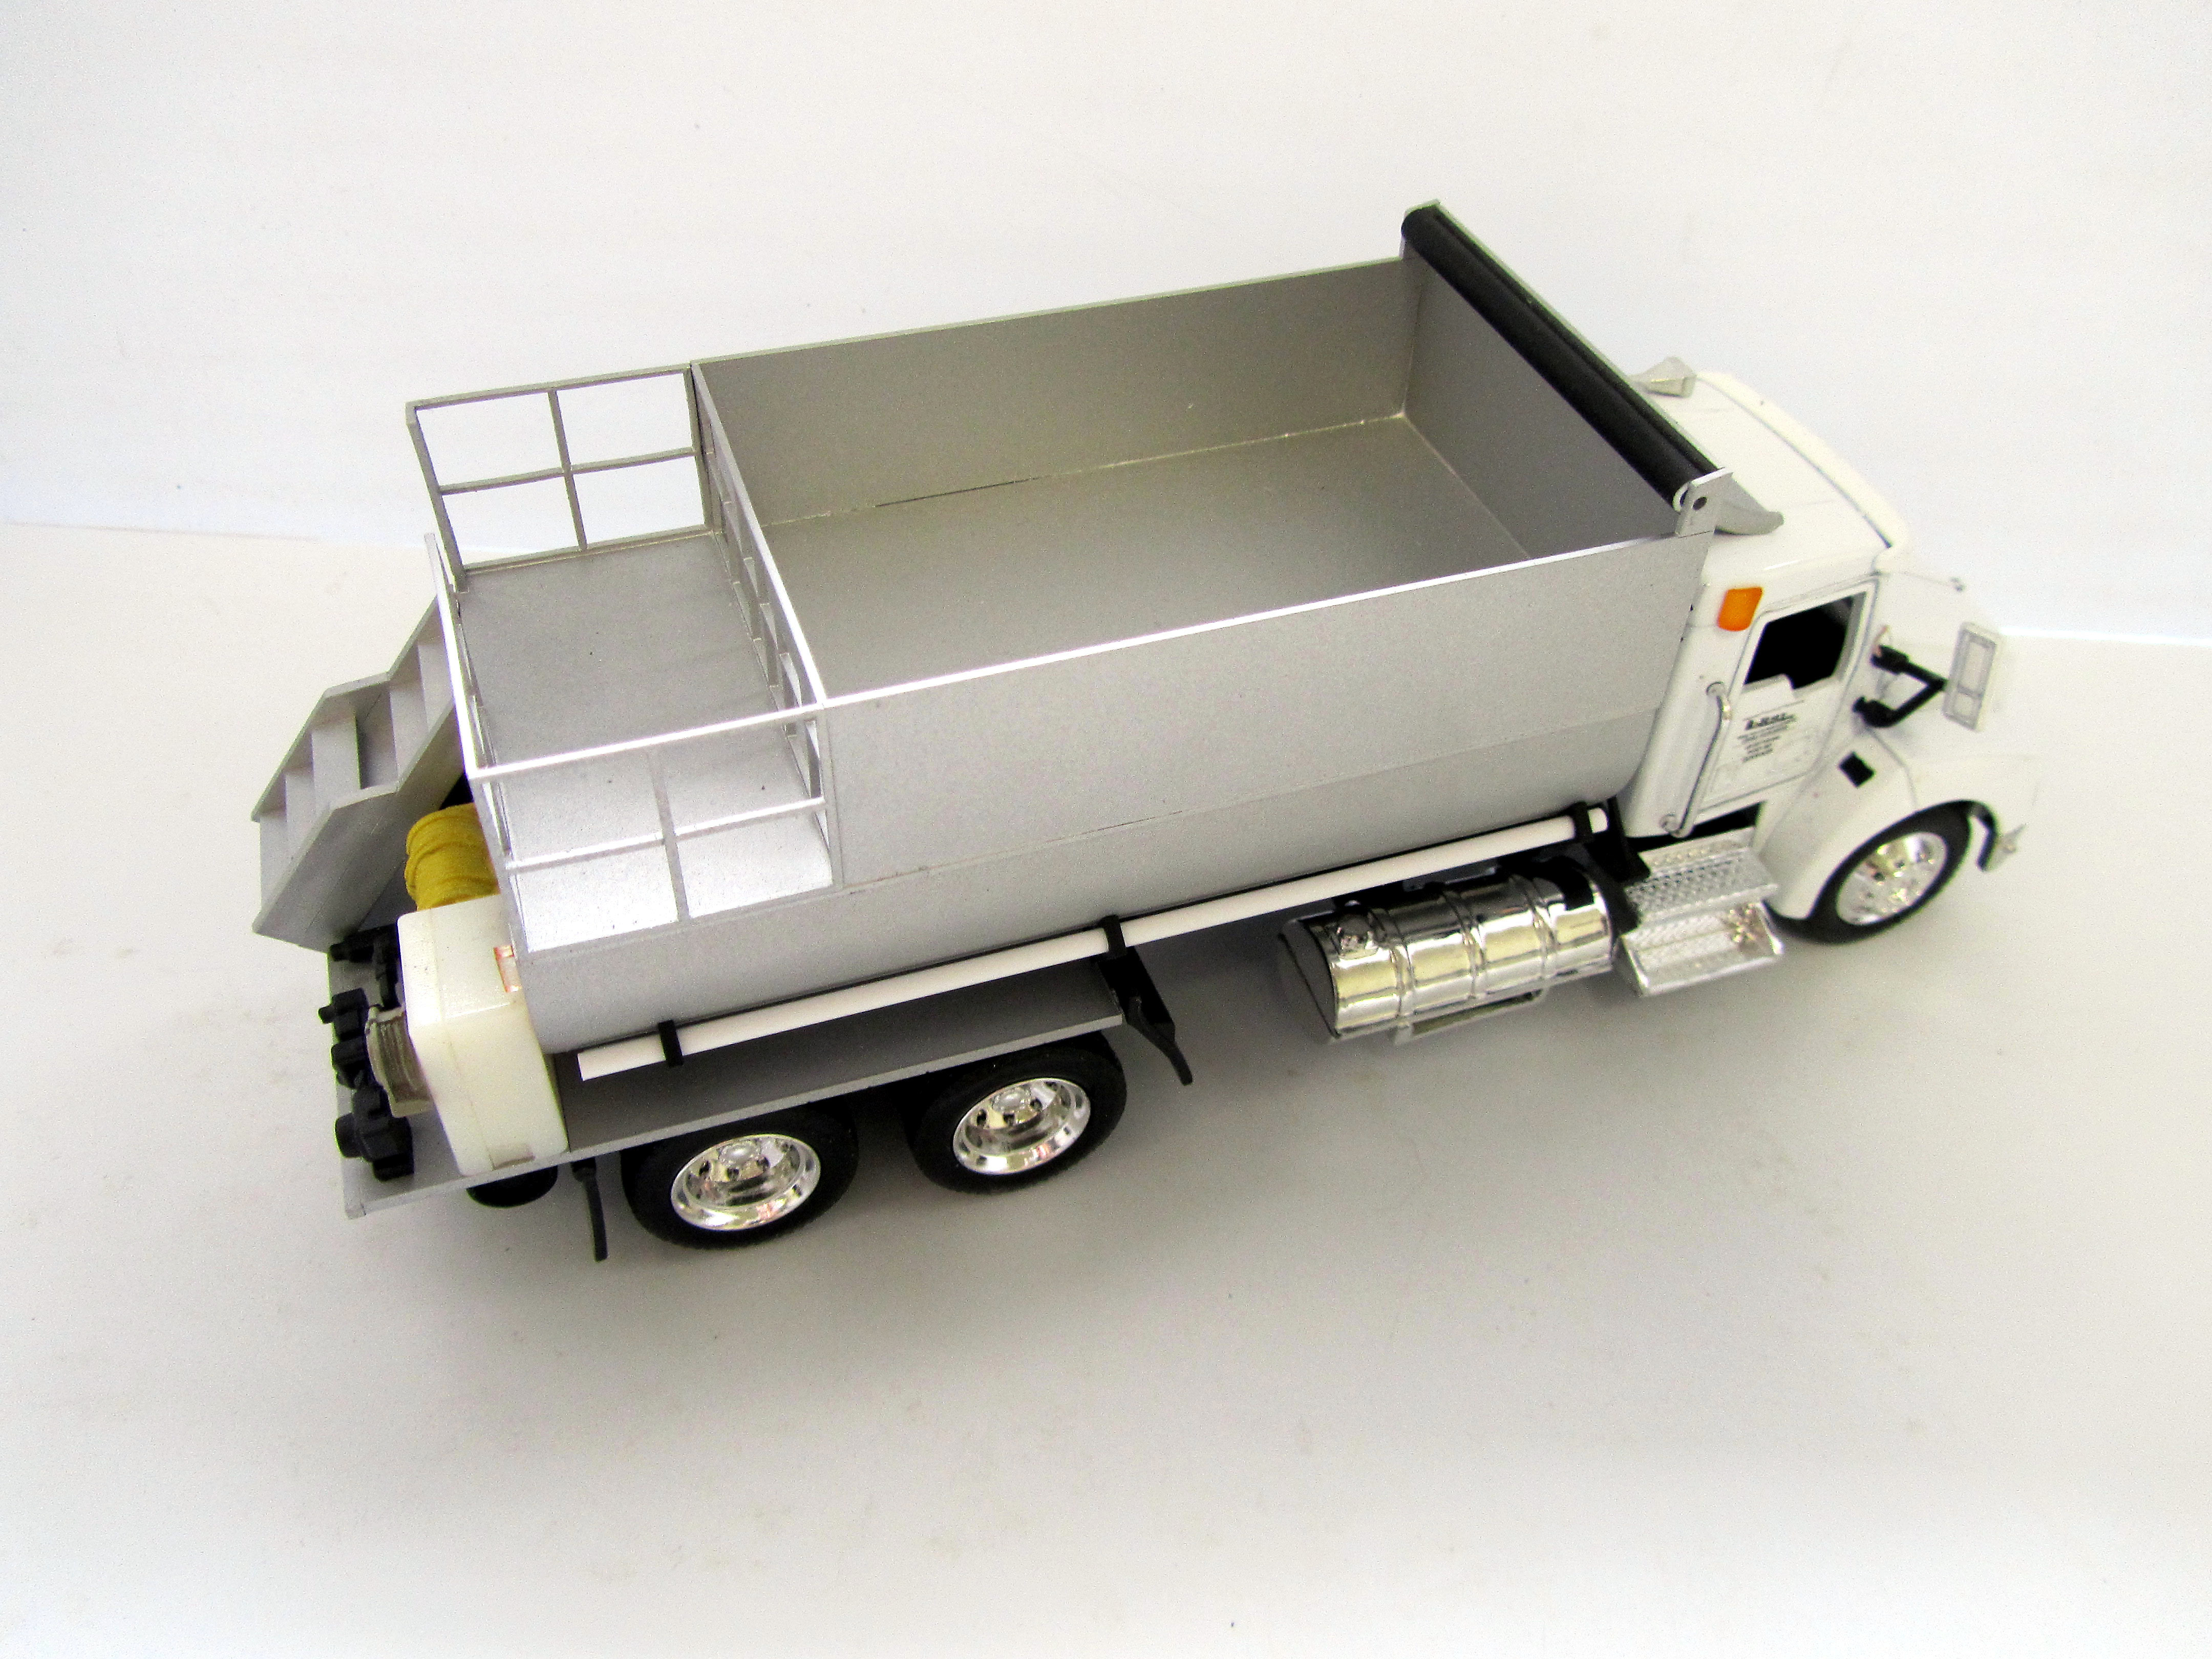 giveaway truck model